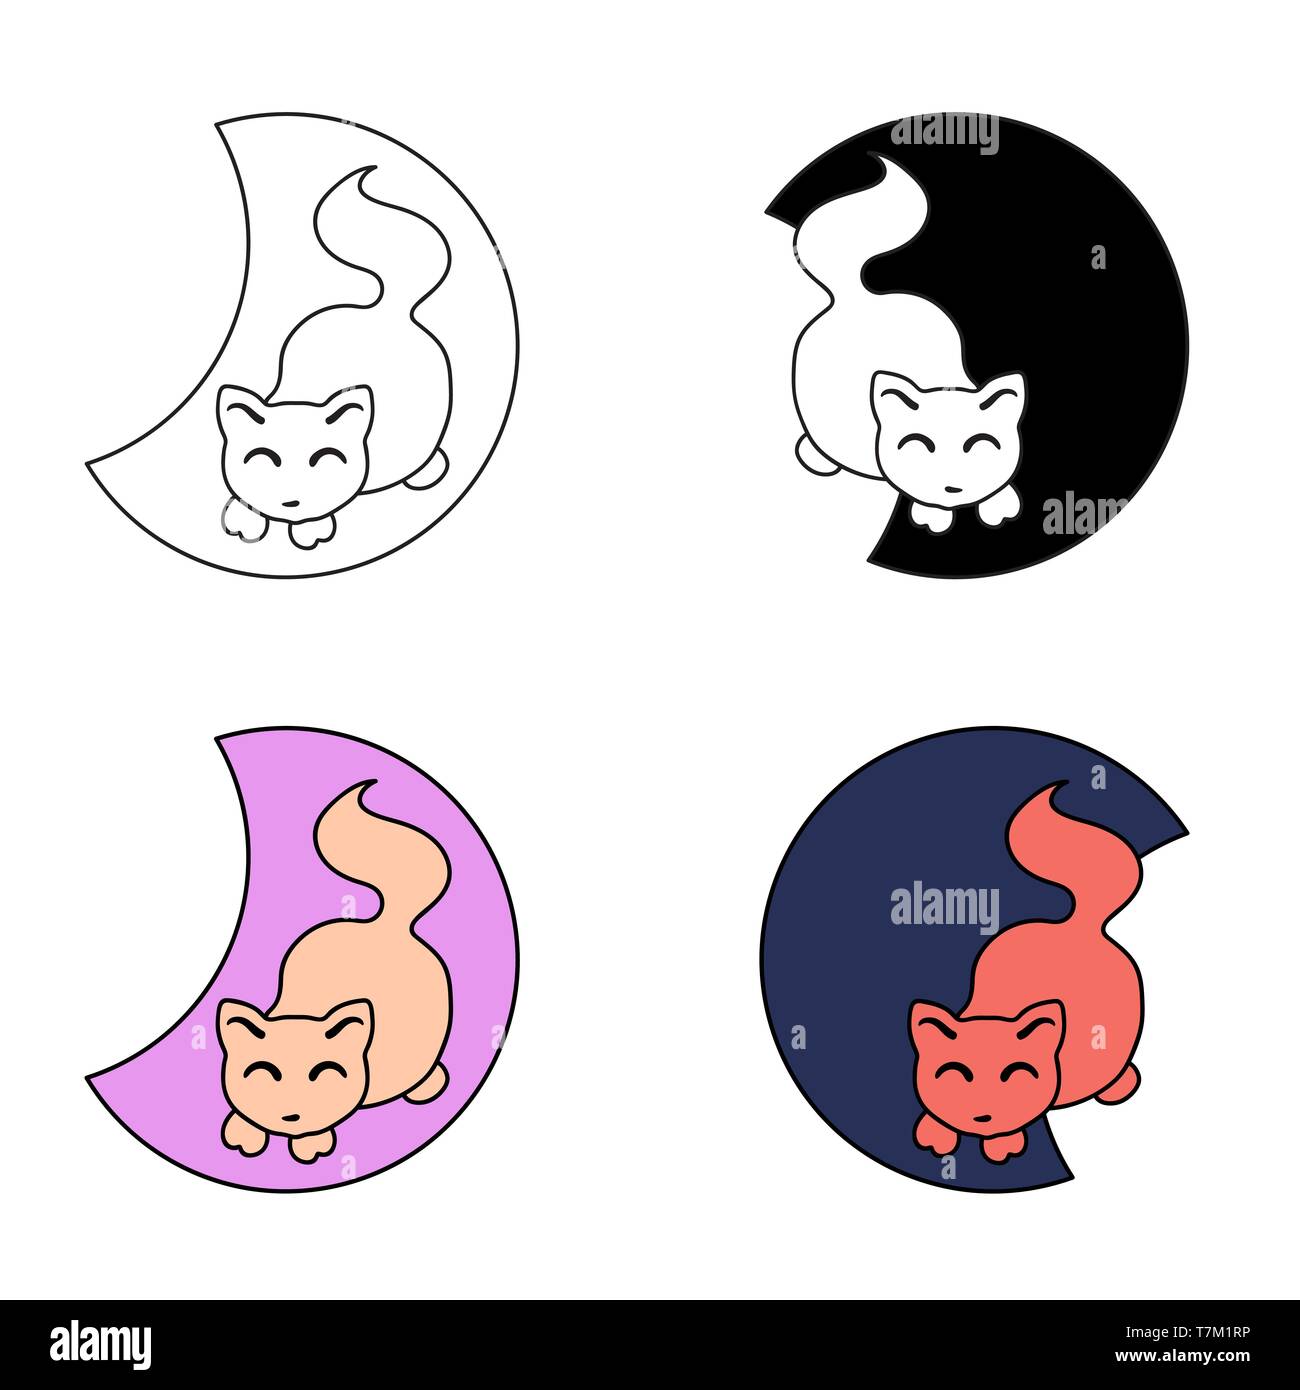 Vector set of cute pet logos, cartoon style Stock Vector